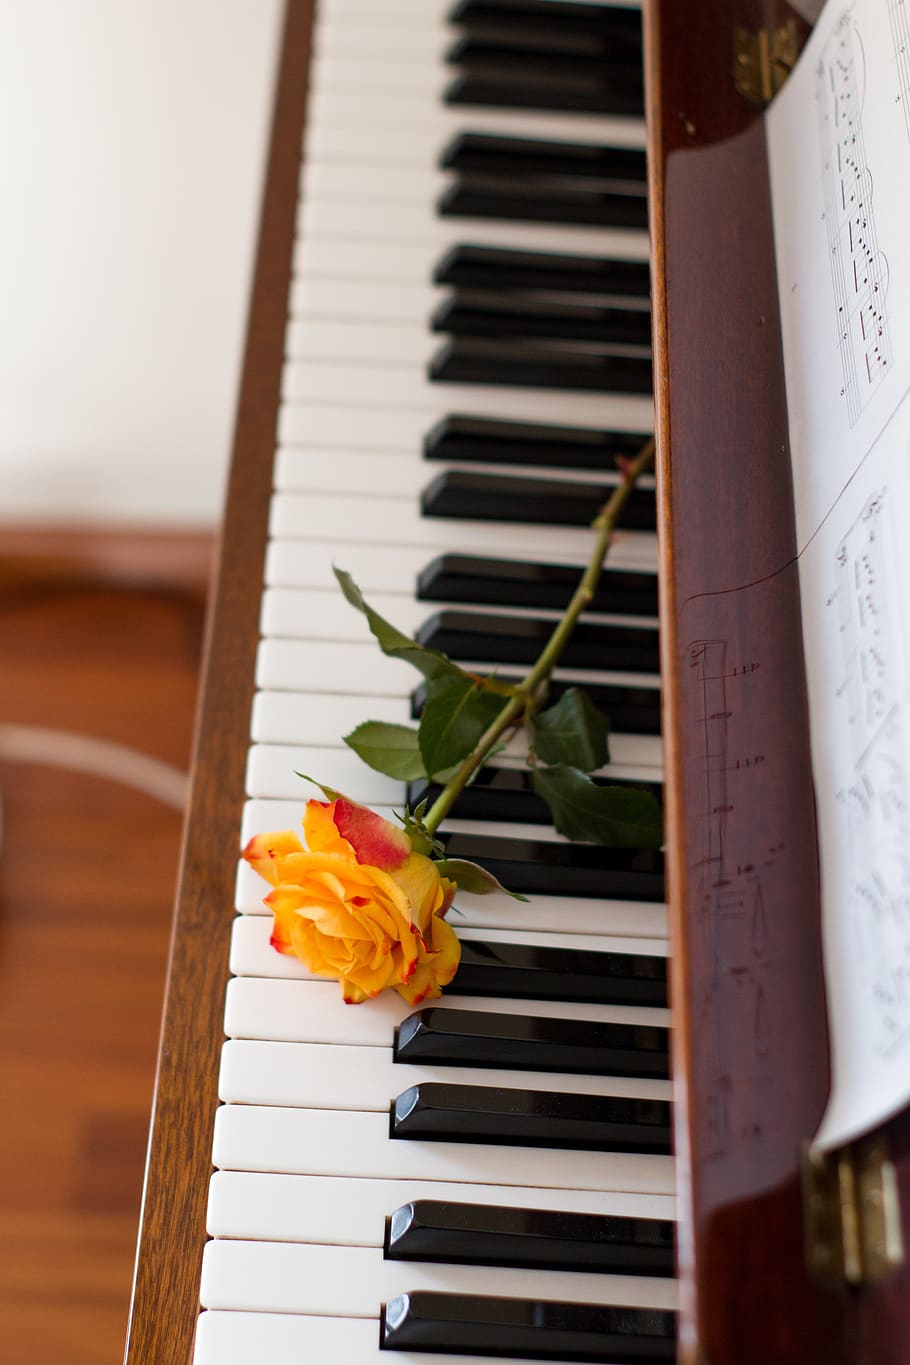 flor, música, piano, romântico, instrumento, planta, ninguém, beleza natural, natureza, frescura